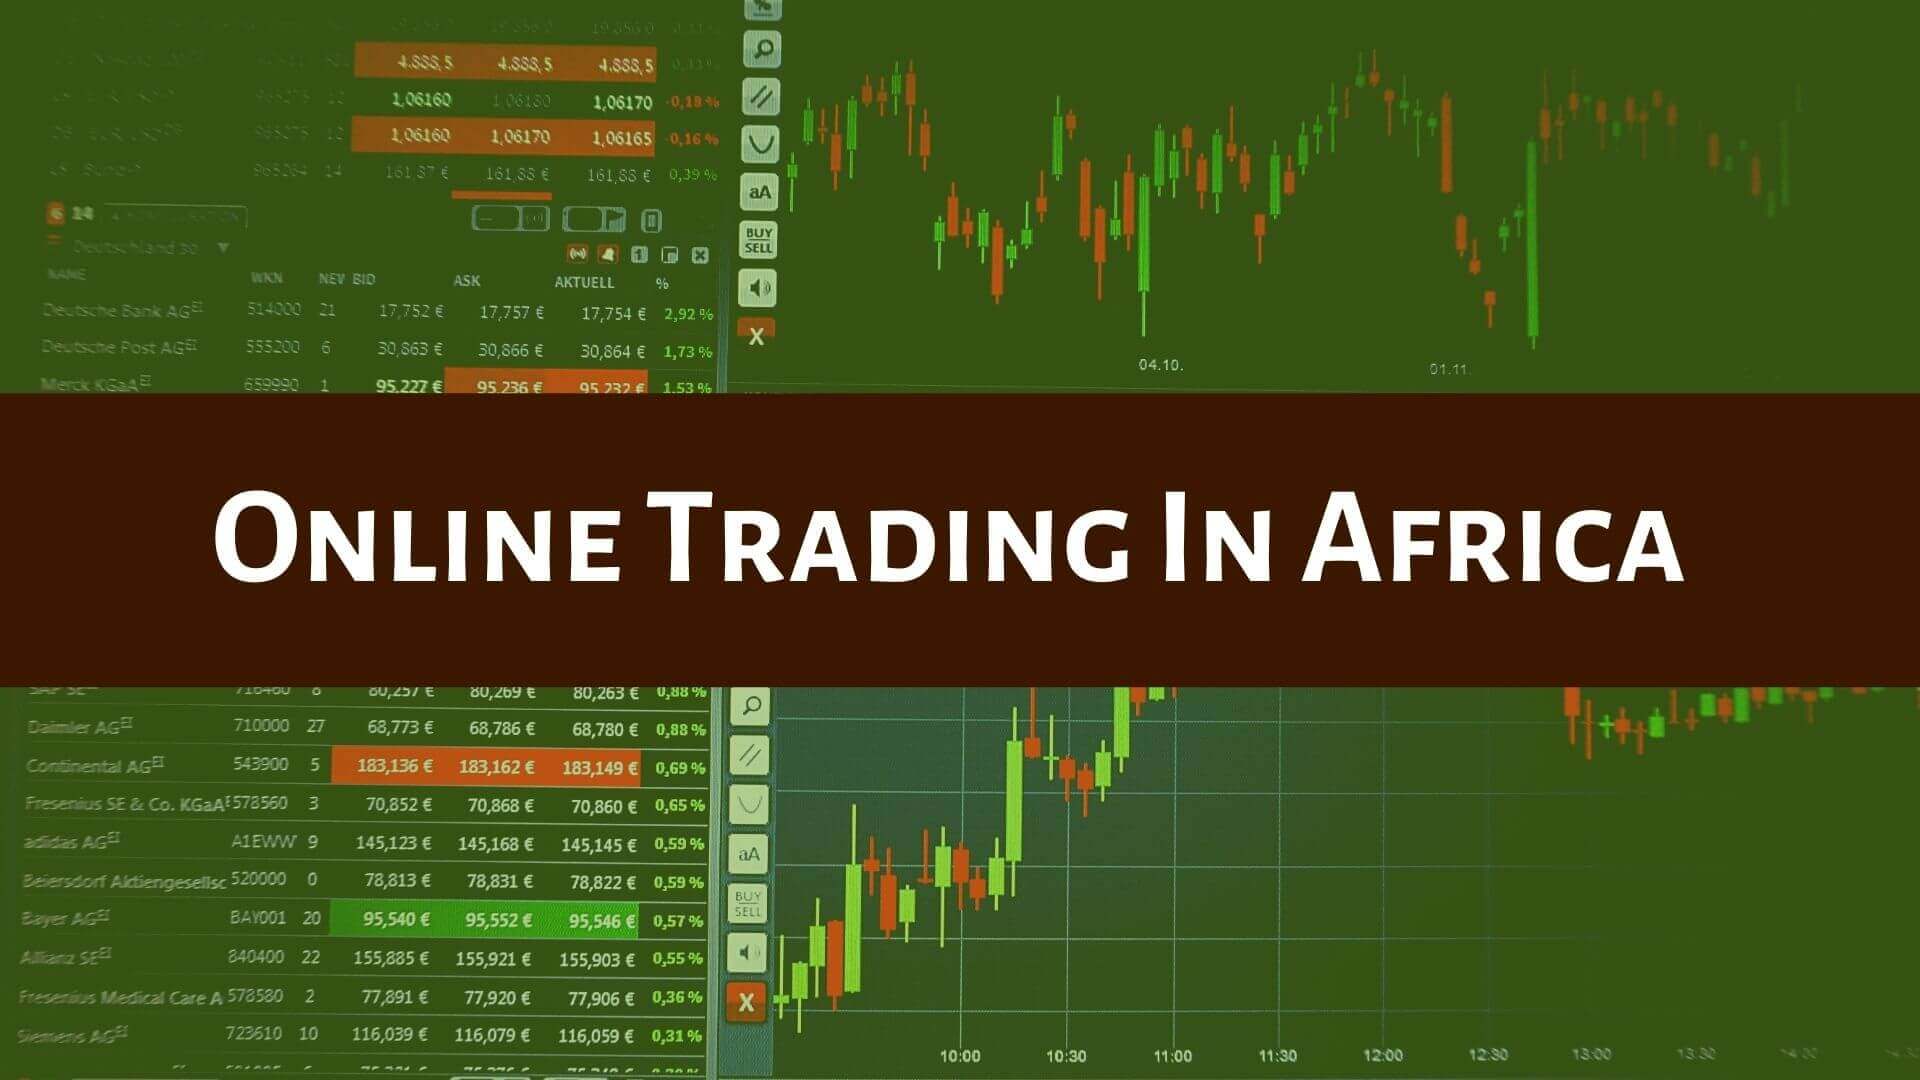 Online Trading In Africa And Coronavirus